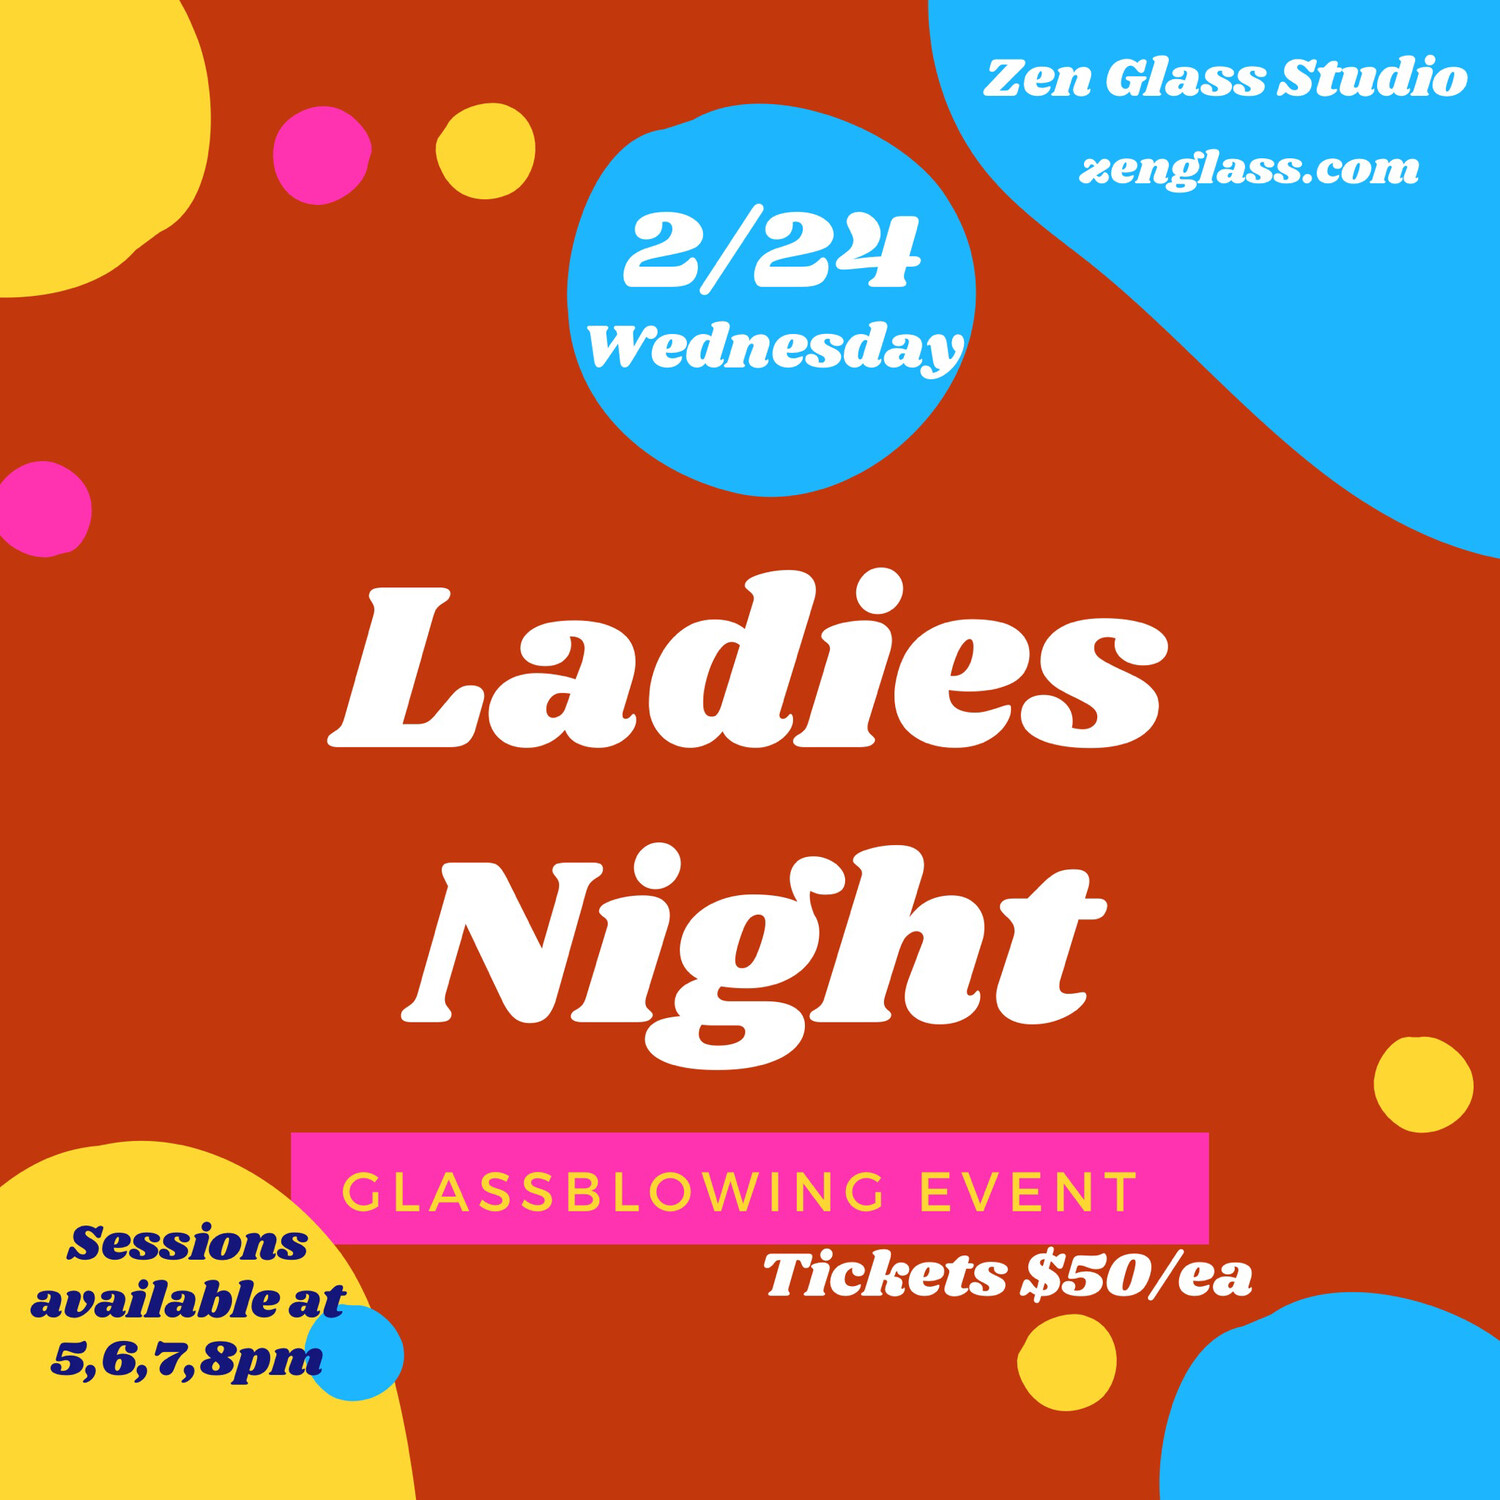 Ladies Night Wednesday February 24th 8pm